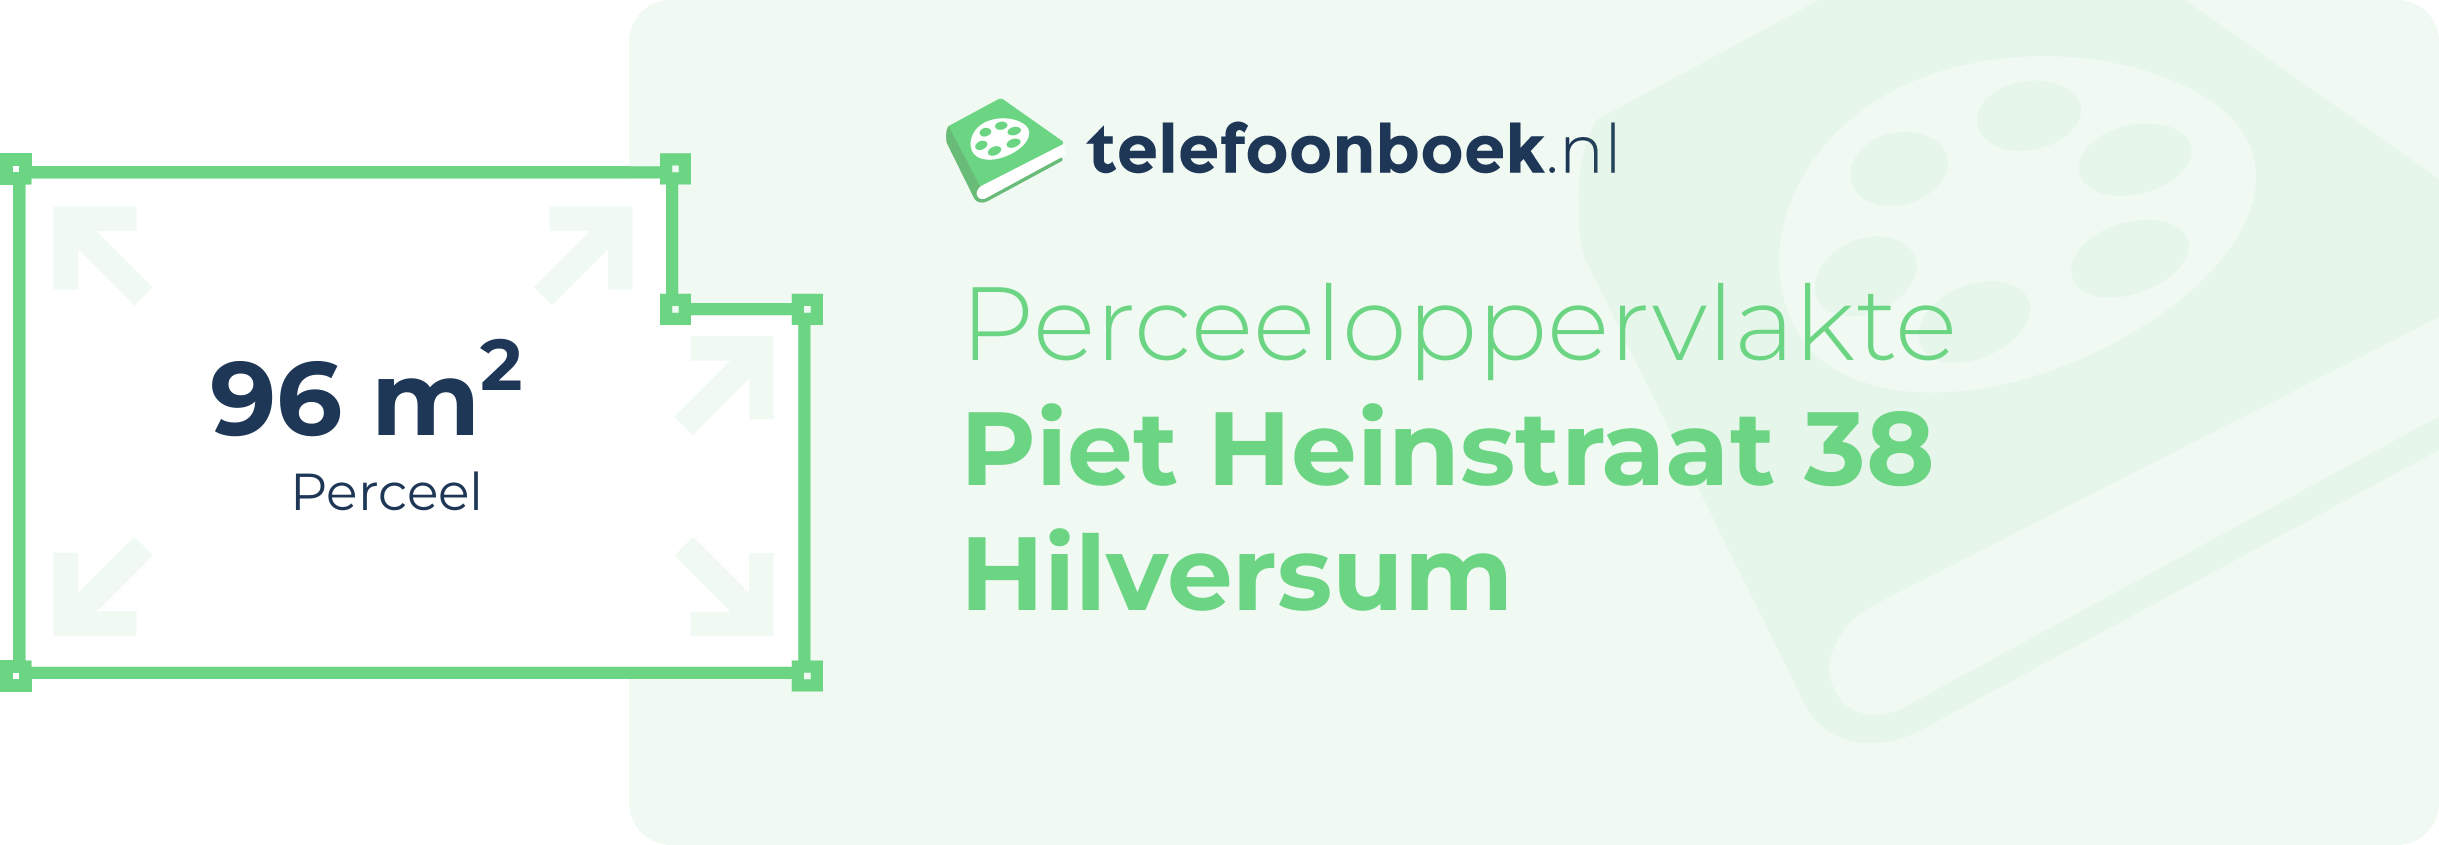 Perceeloppervlakte Piet Heinstraat 38 Hilversum